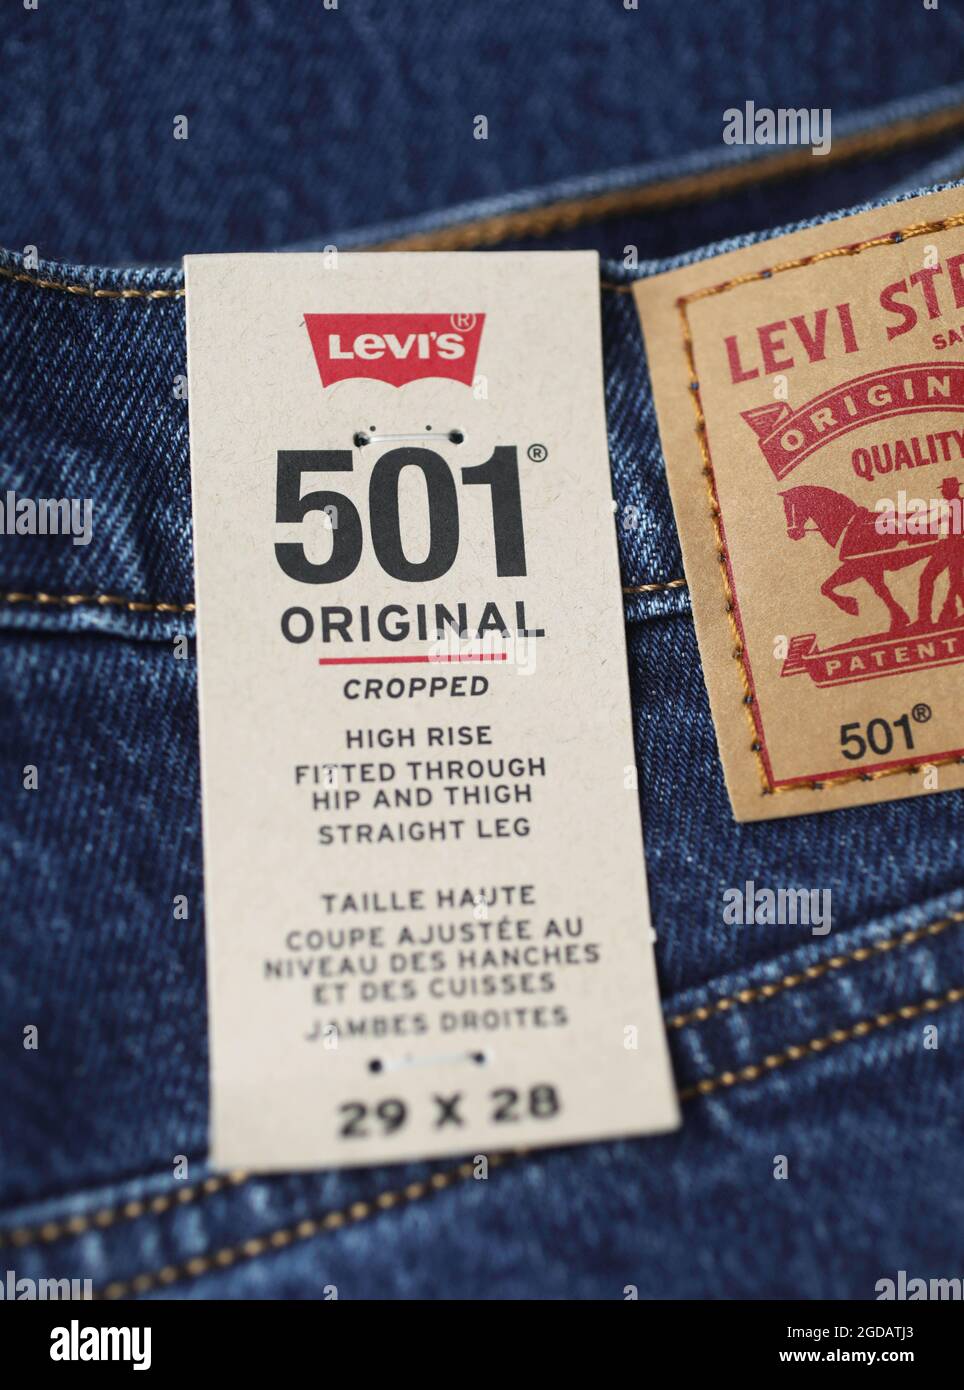 Levi's 501 Original from Levi Strauss Co Stock Photo Alamy